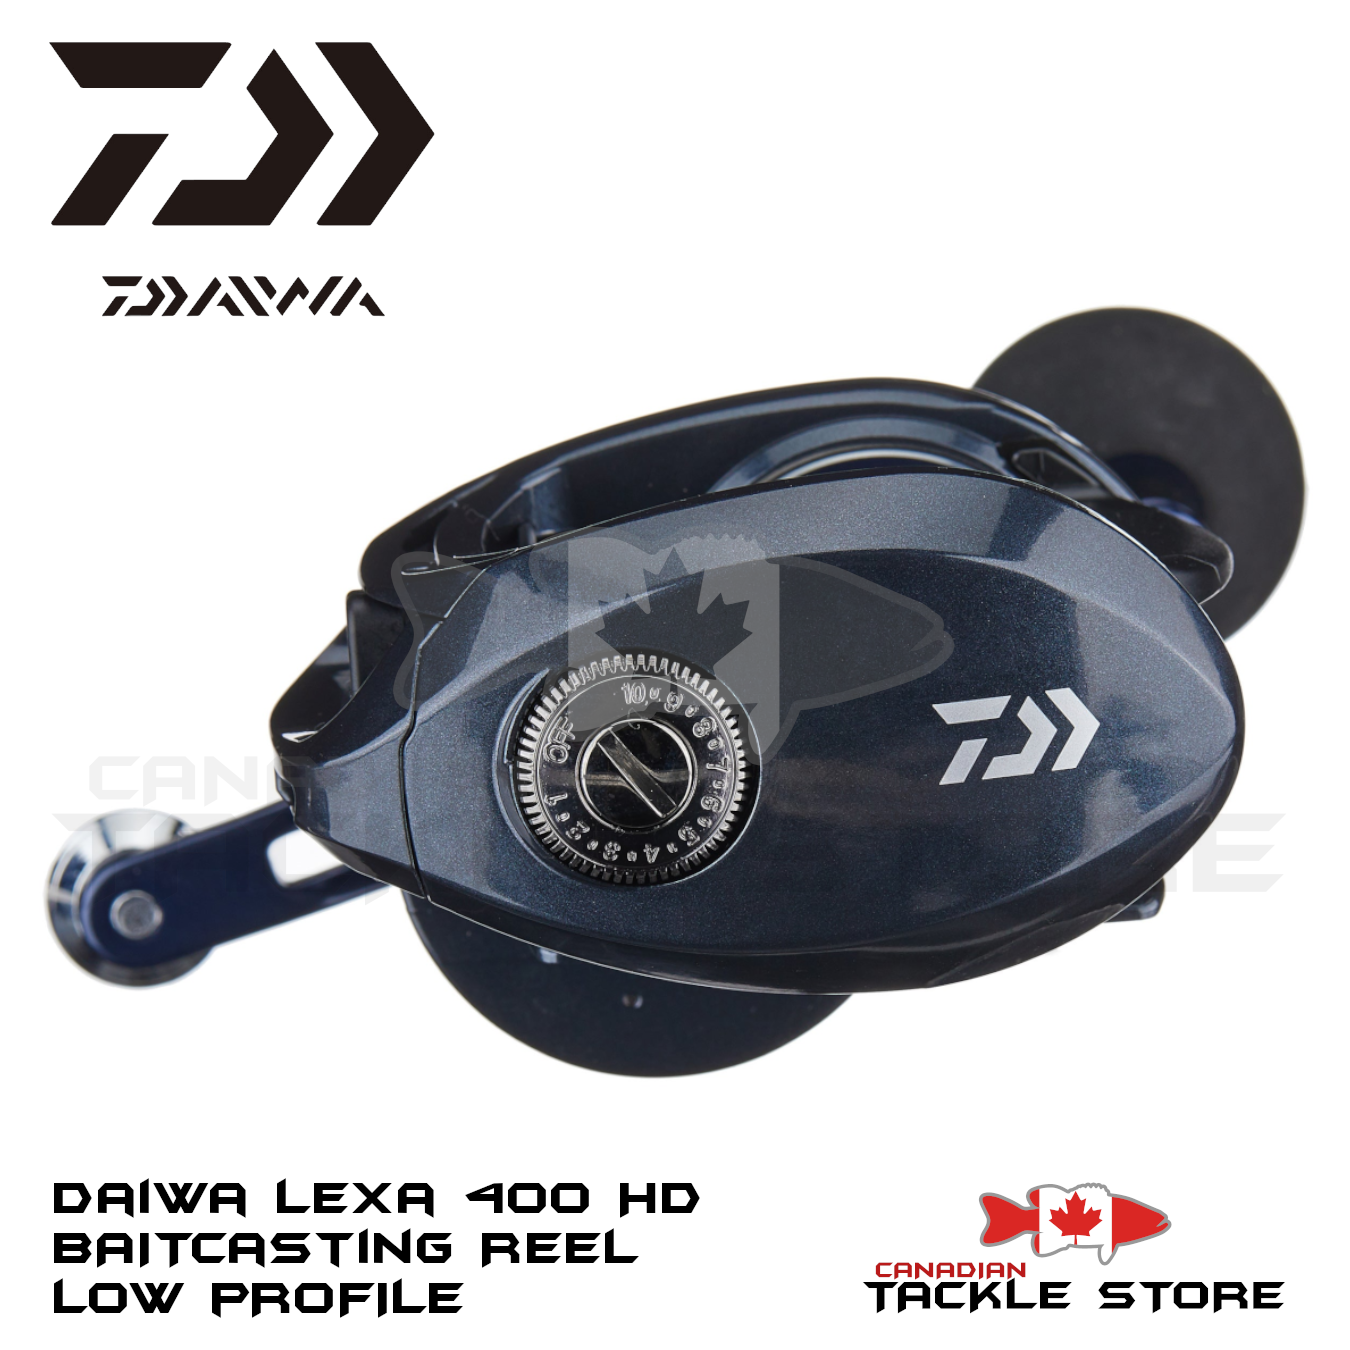 Daiwa Lexa 400 HD Baitcasting Reel – Canadian Tackle Store